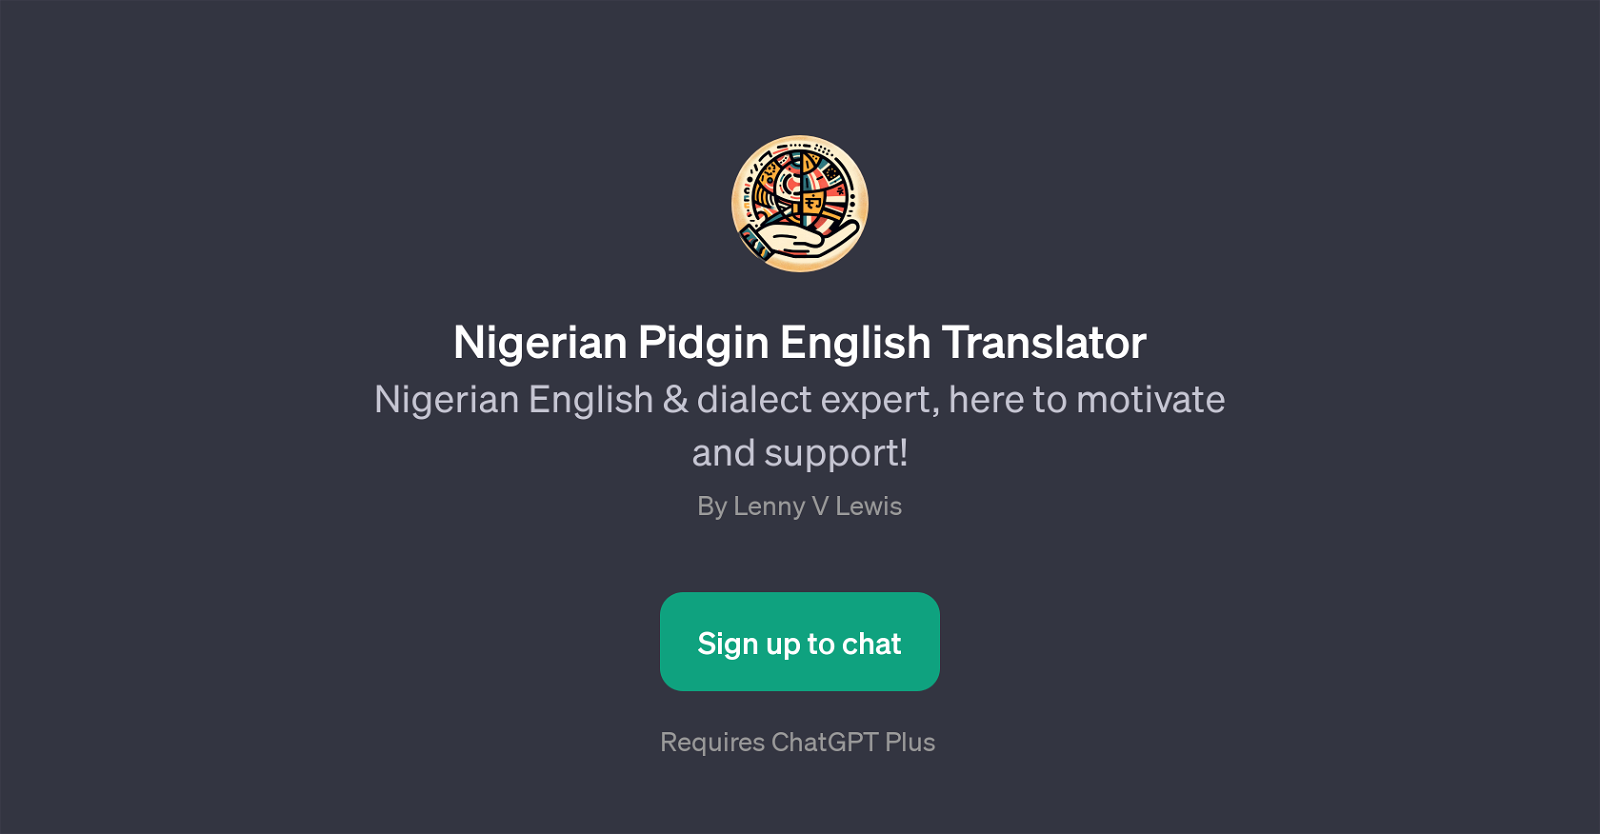 Nigerian Pidgin English Translator website